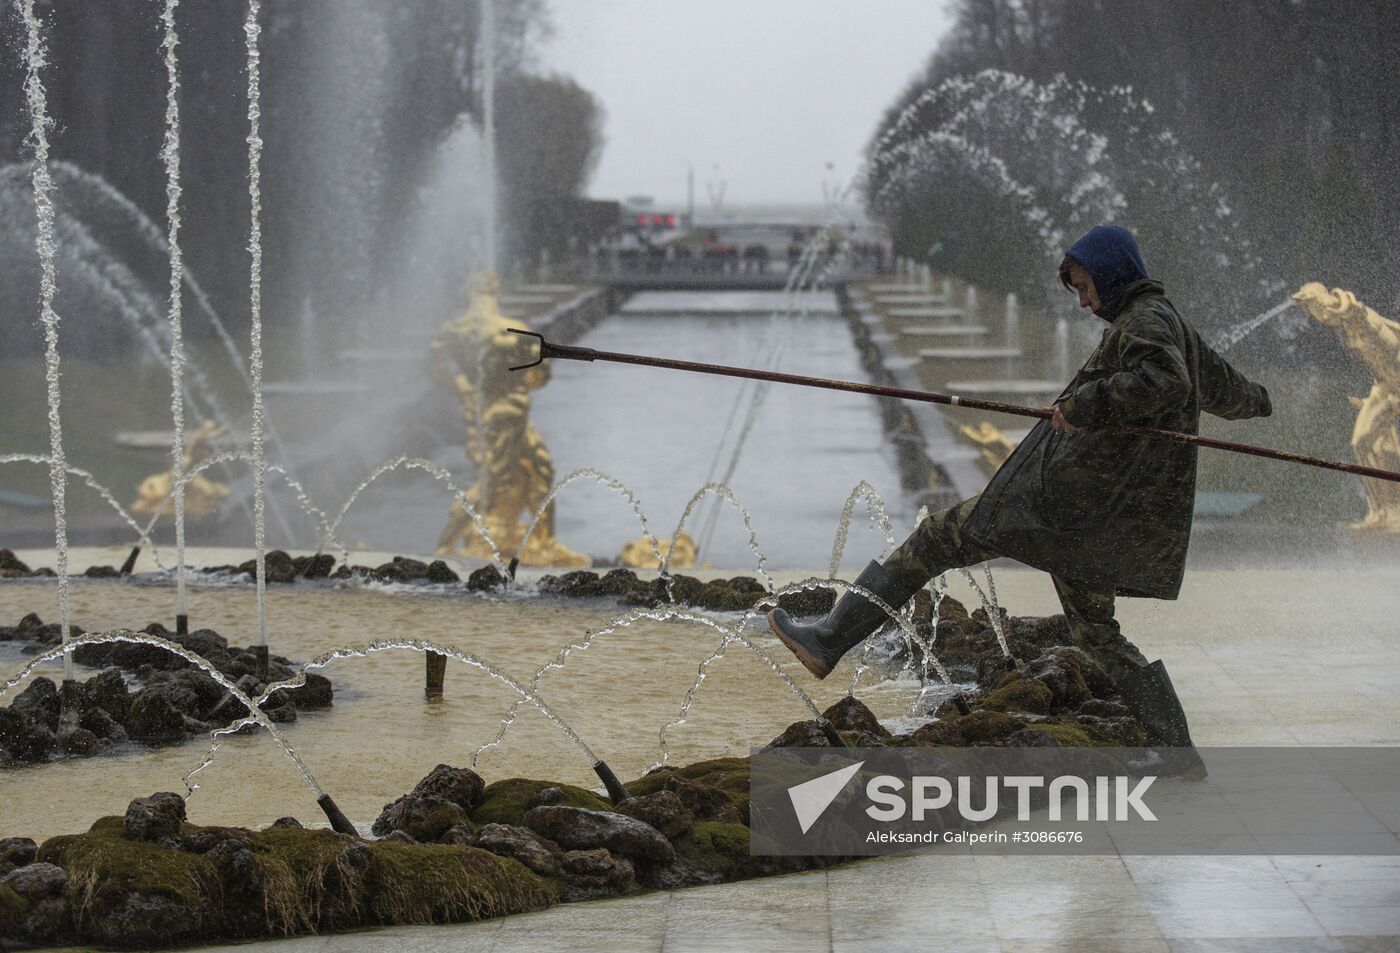 Peterhof fountains start summer season